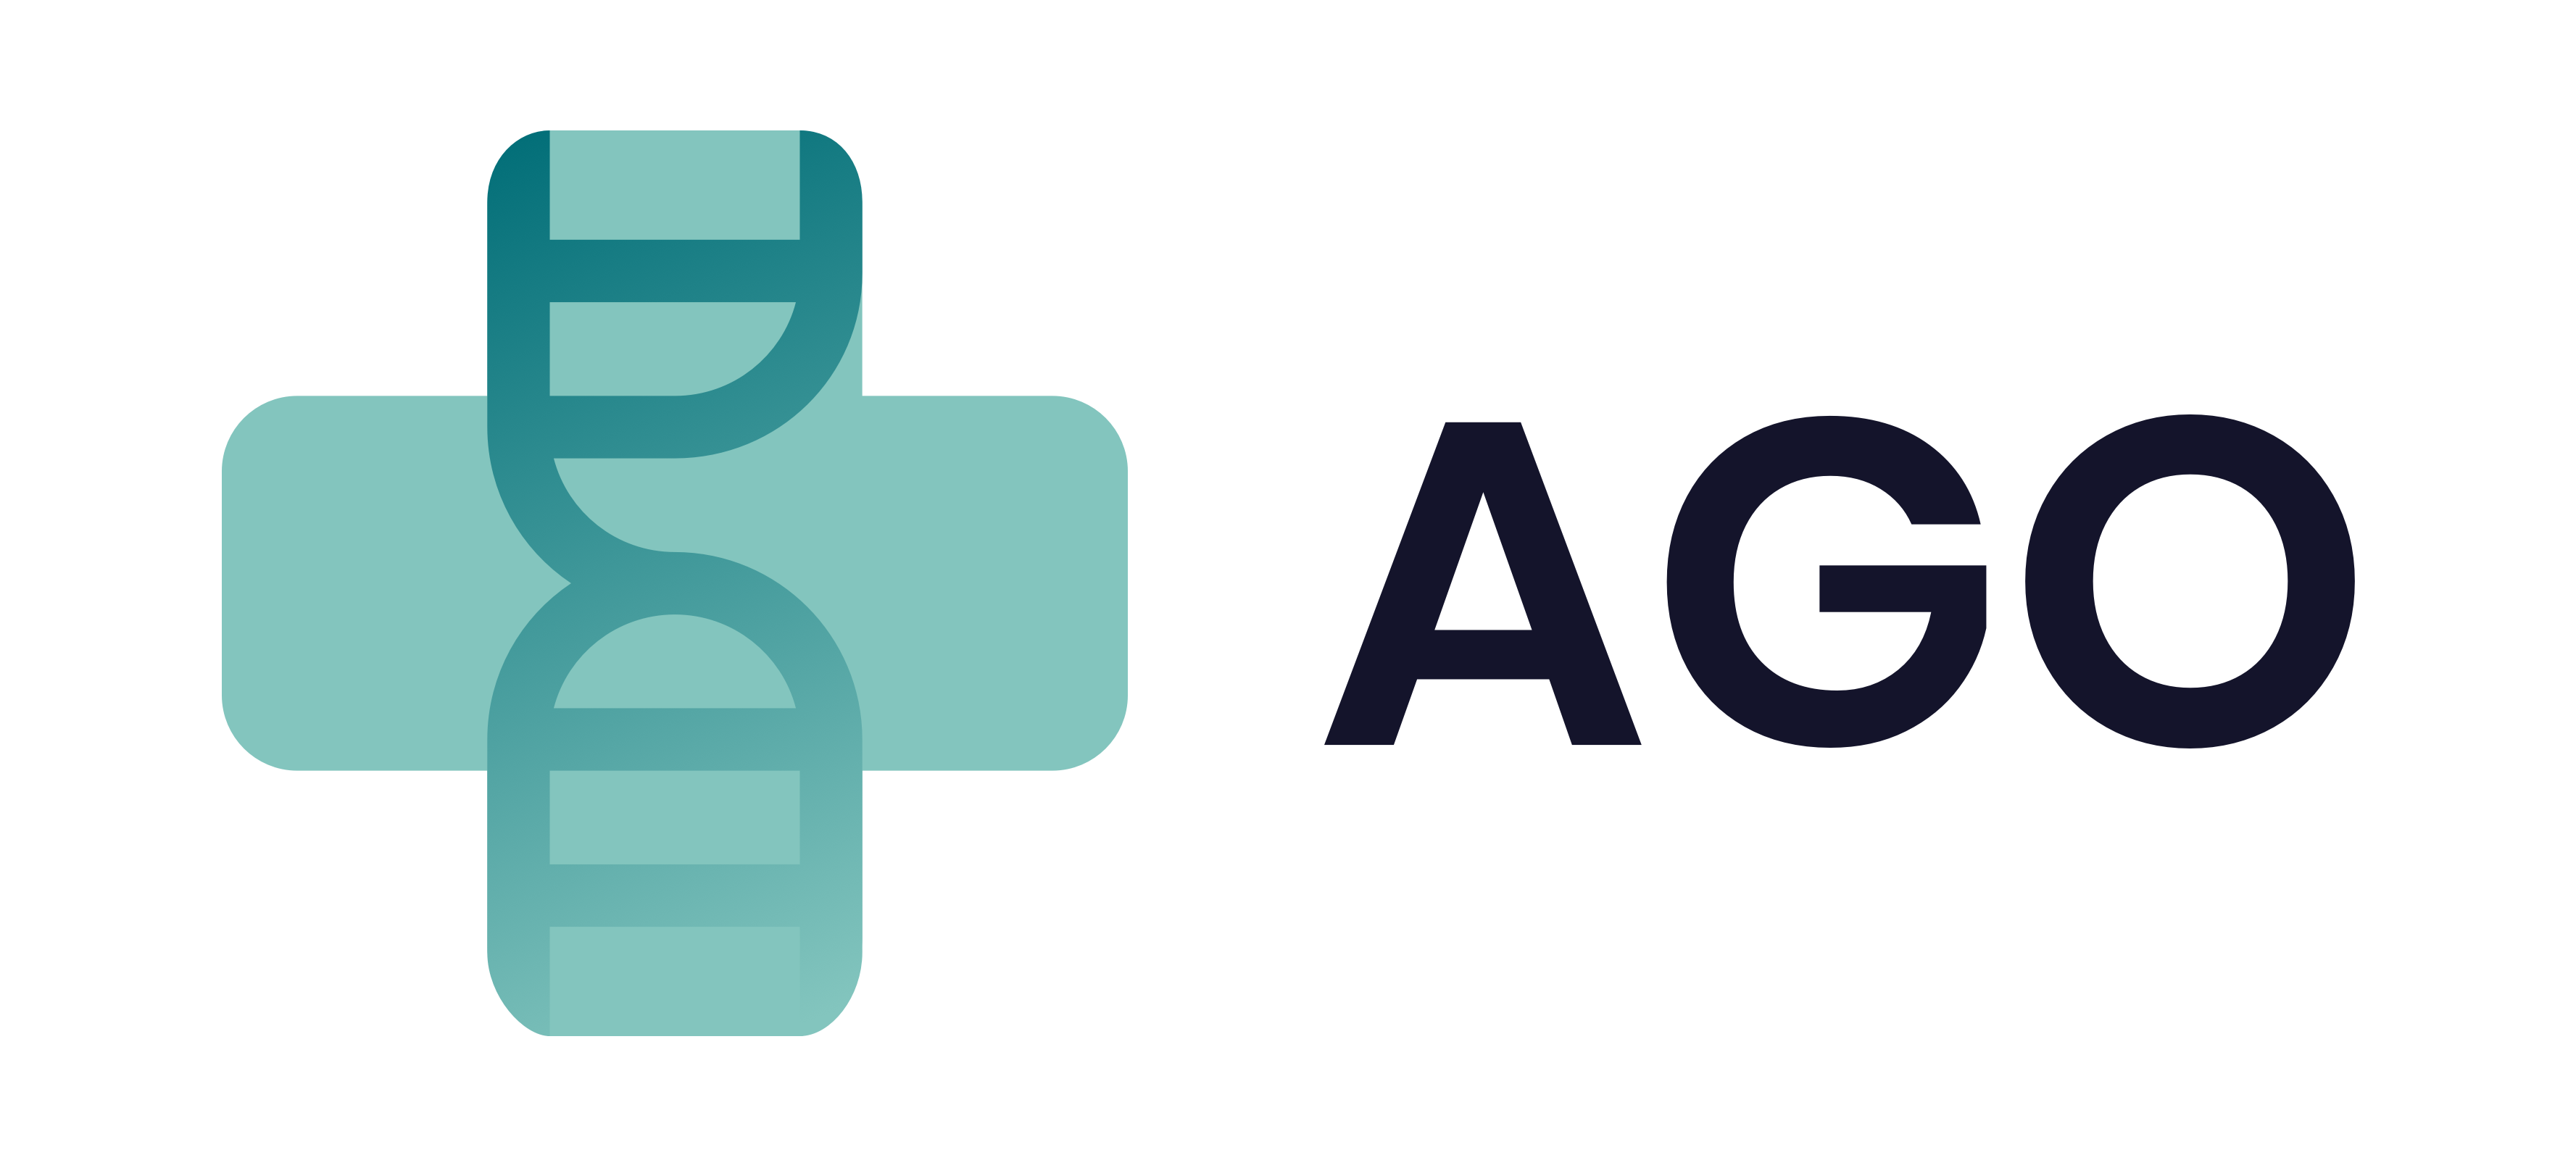 The AGO Alliance logo